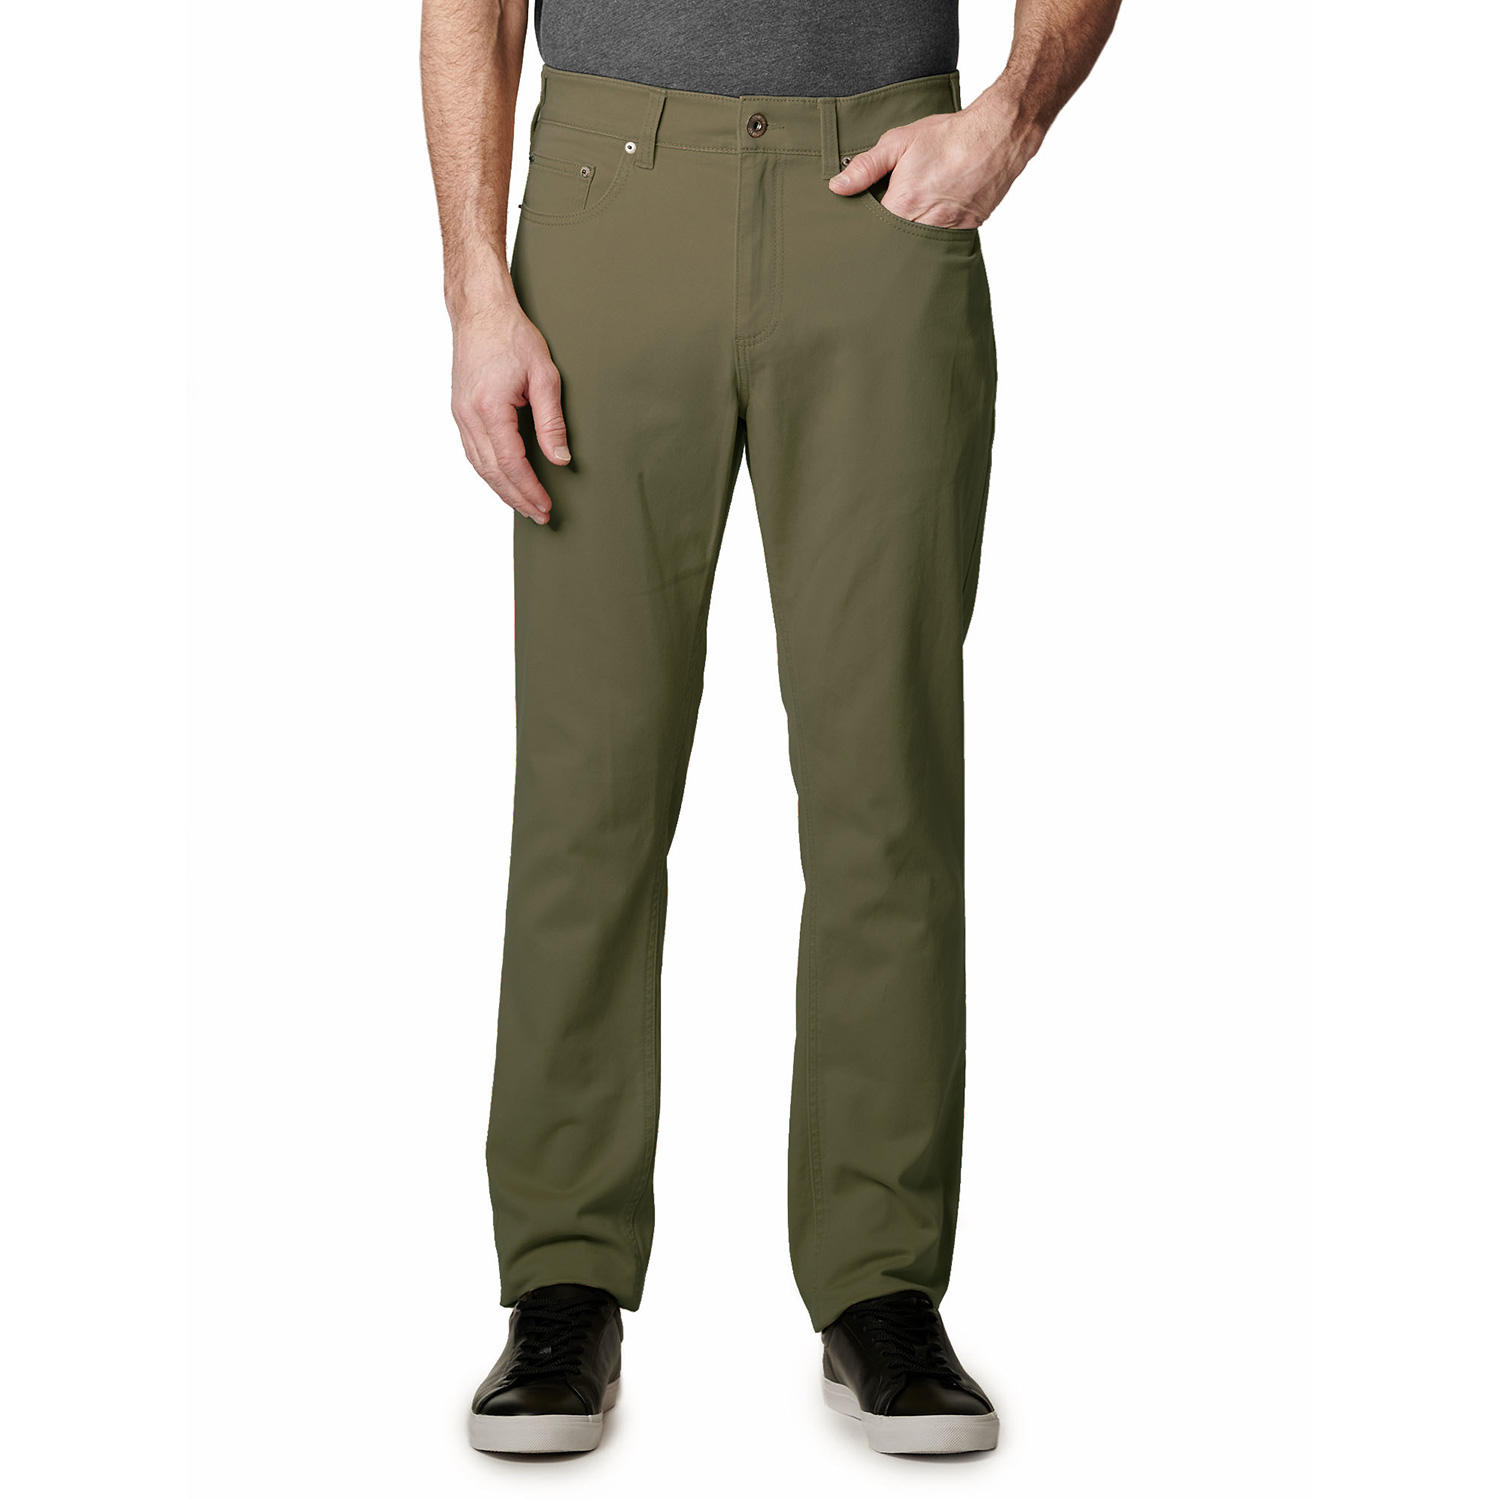 IRON Clothing PATRIOT Comfort Flex Waistband 5 Pocket Stretch Twill Pant - Turtle Green 40x30